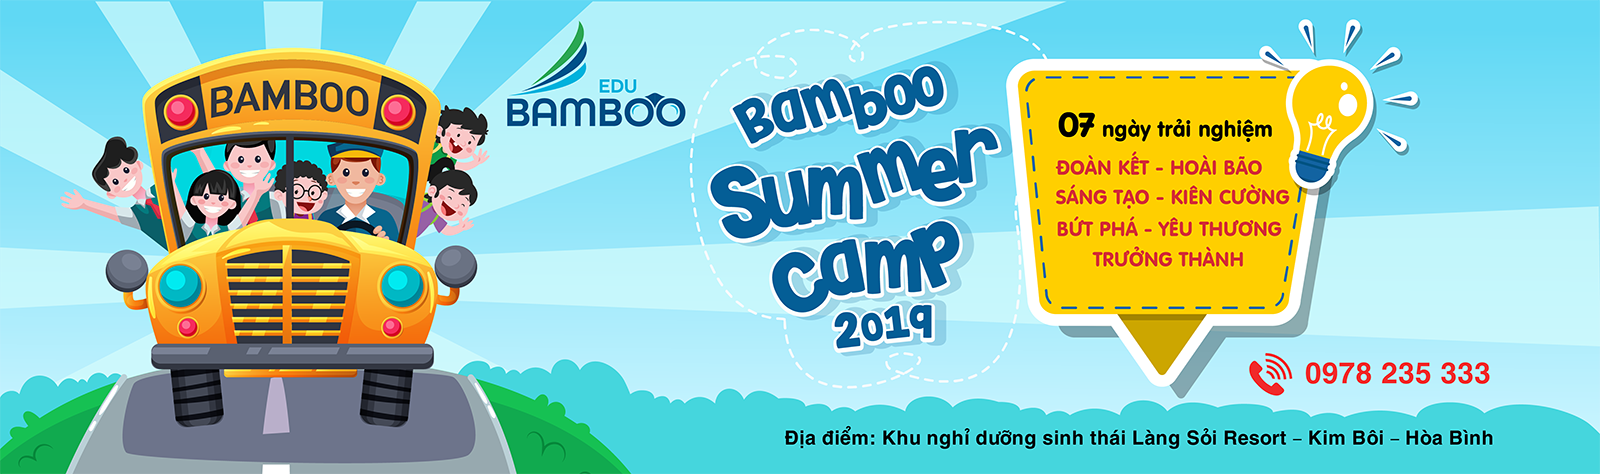 Bamboo Summer camp 2019